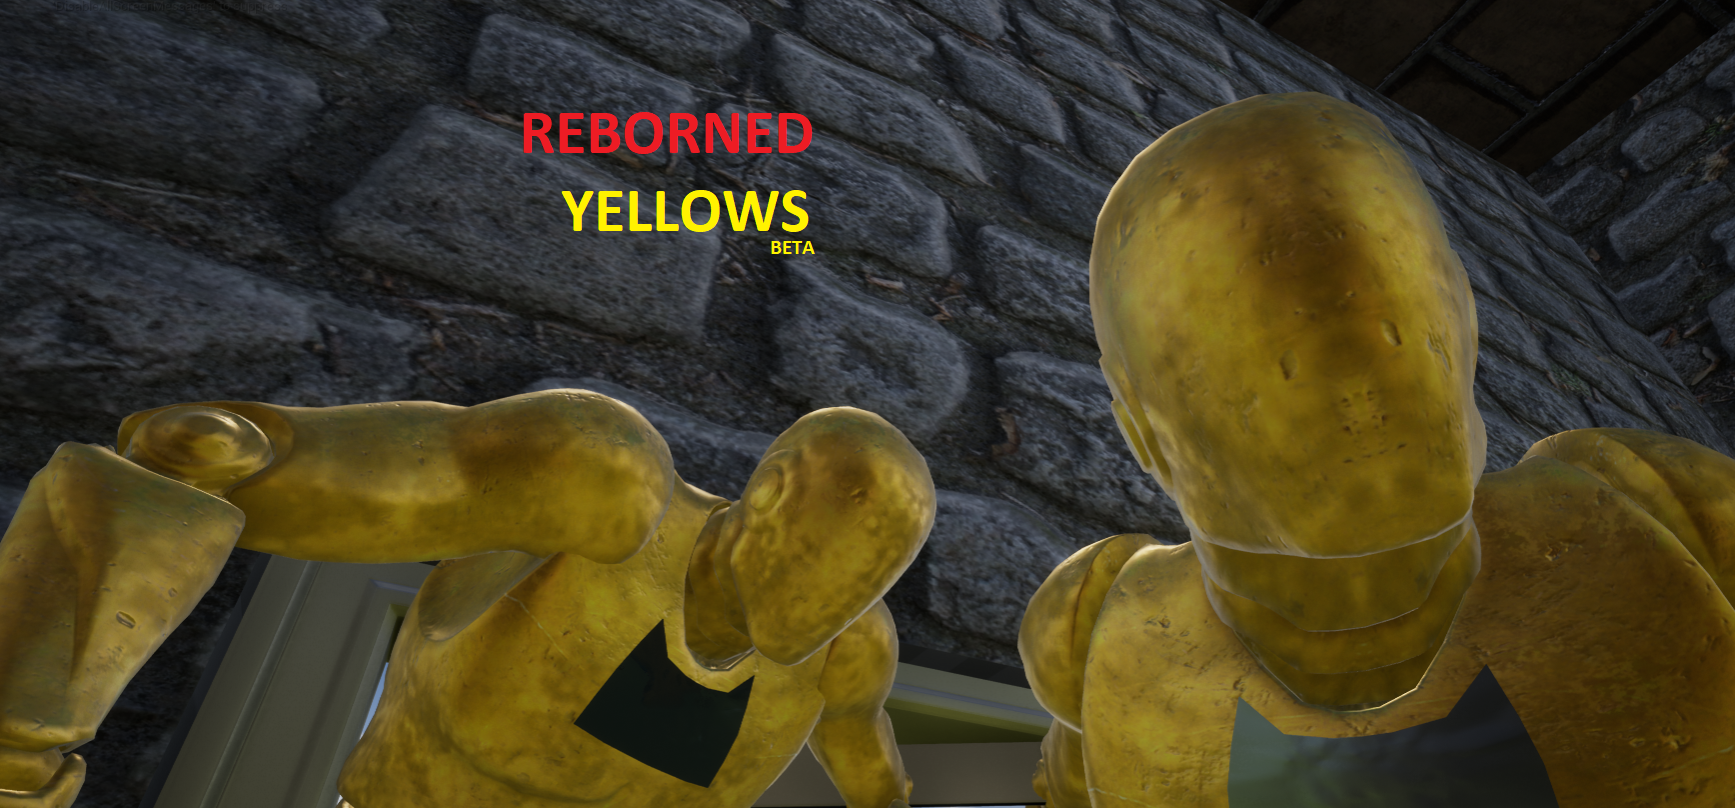 Reborned Yellows Beta